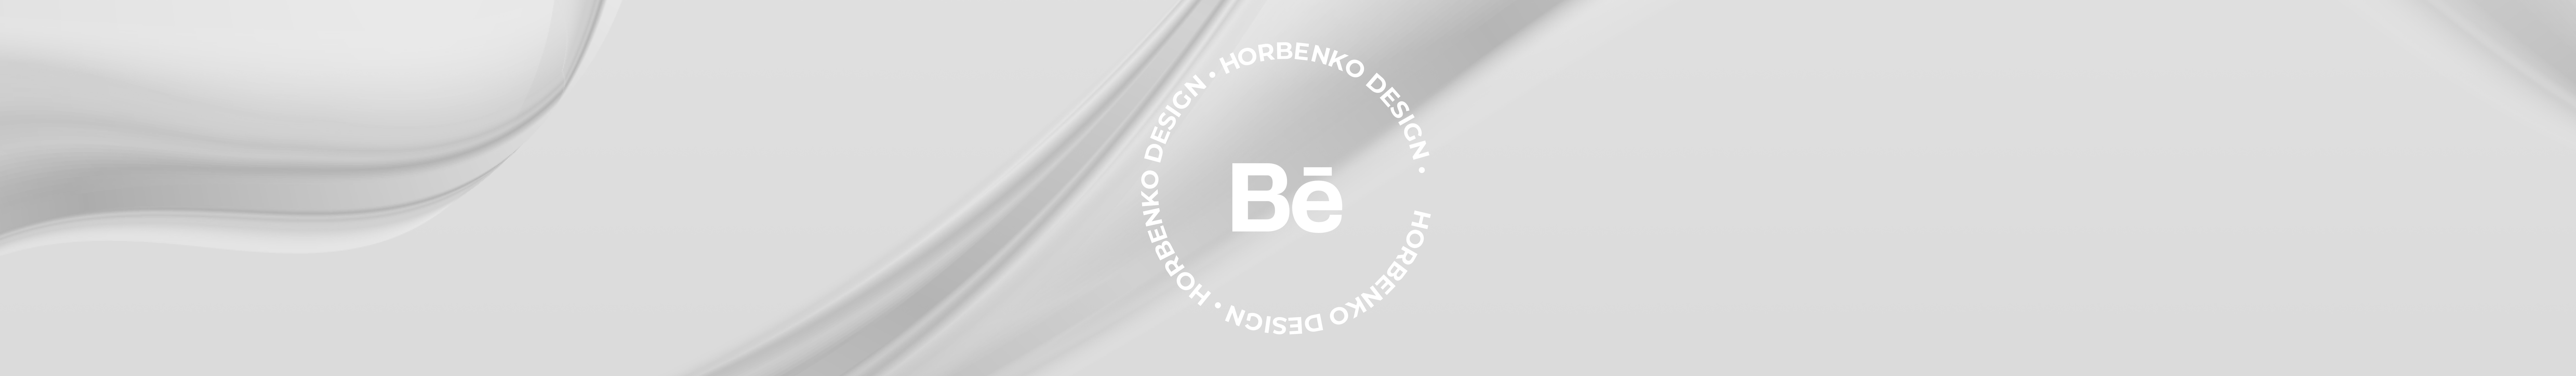 Banner de perfil de Sofiia Horbenko